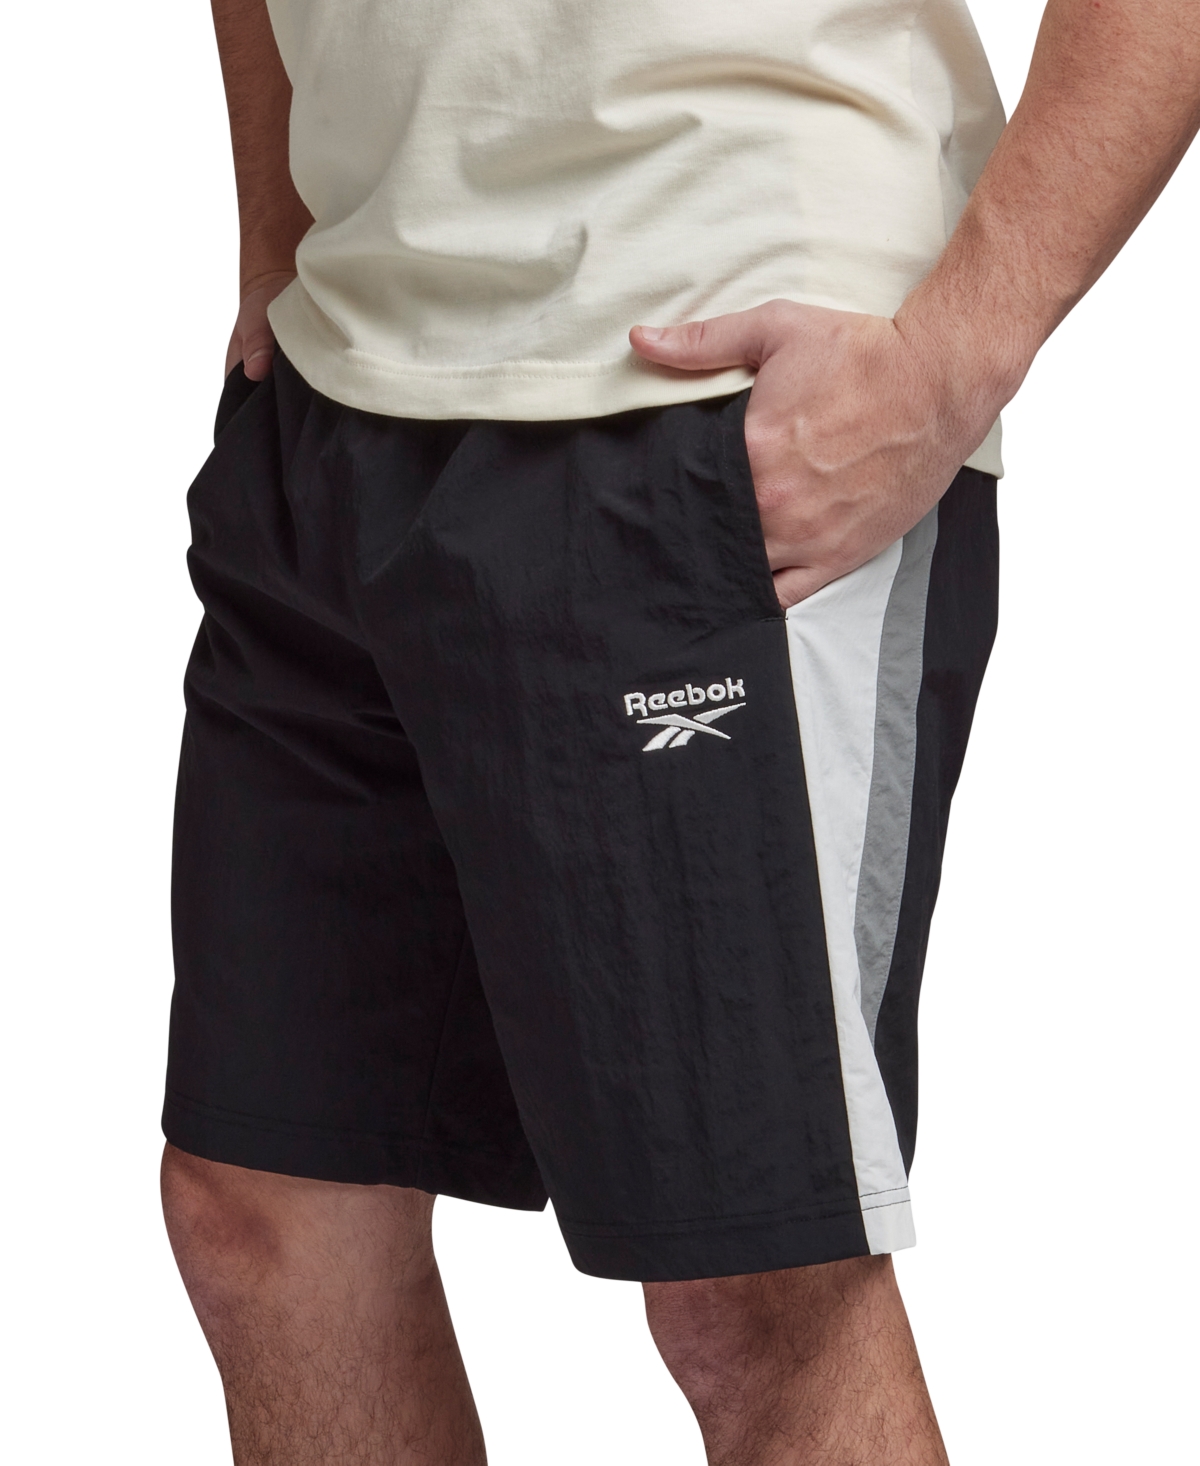 Reebok Men's Ivy League Regular-fit Colorblocked Crinkled Shorts In Black,gray,white